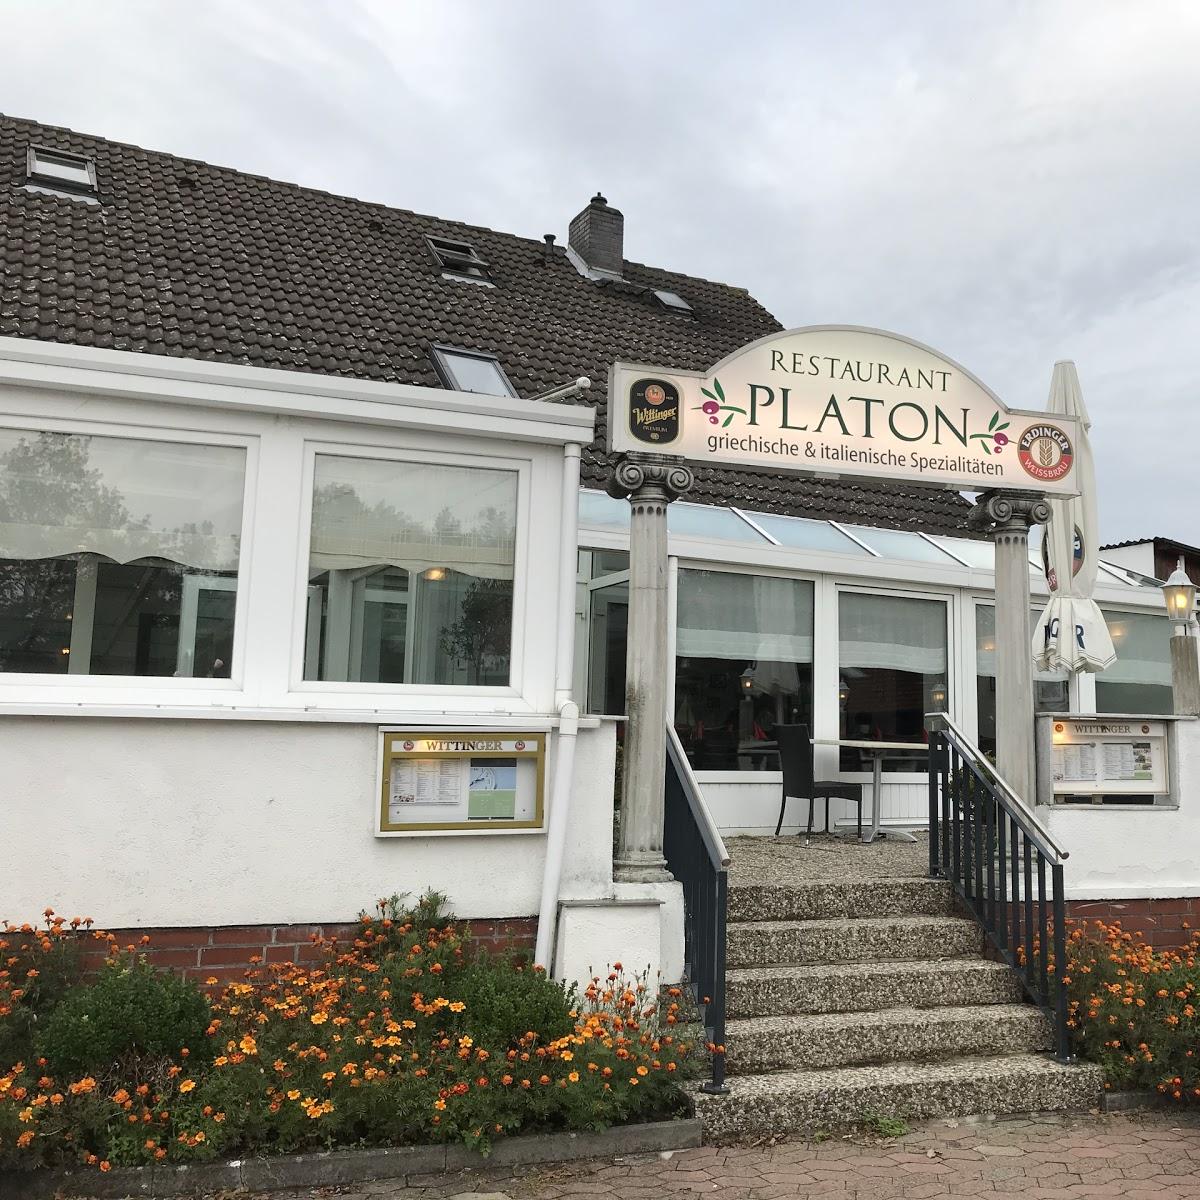 Restaurant "Restaurant Platon" in  Gifhorn